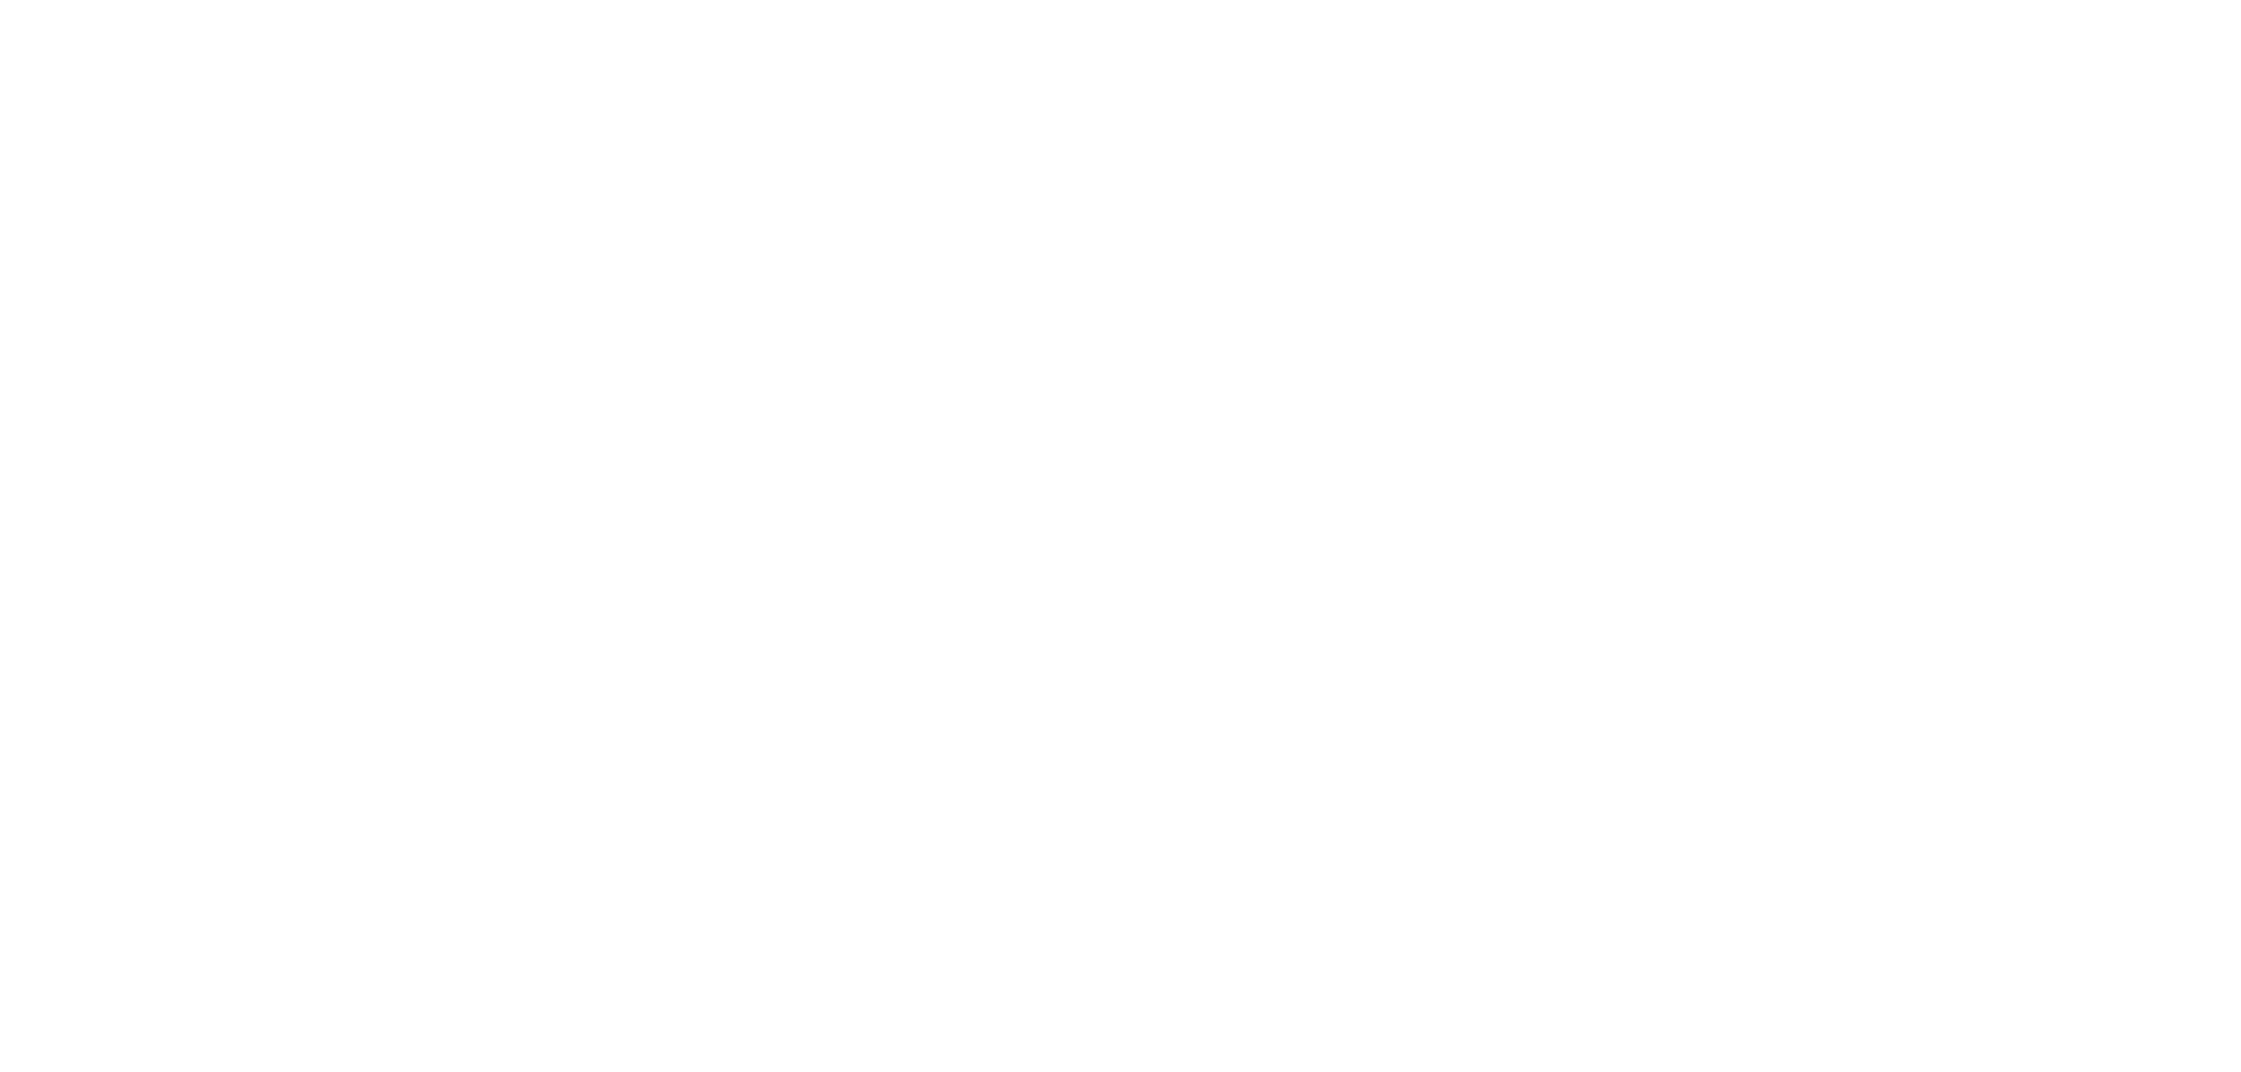 Homepage: Toronto Met University magazine